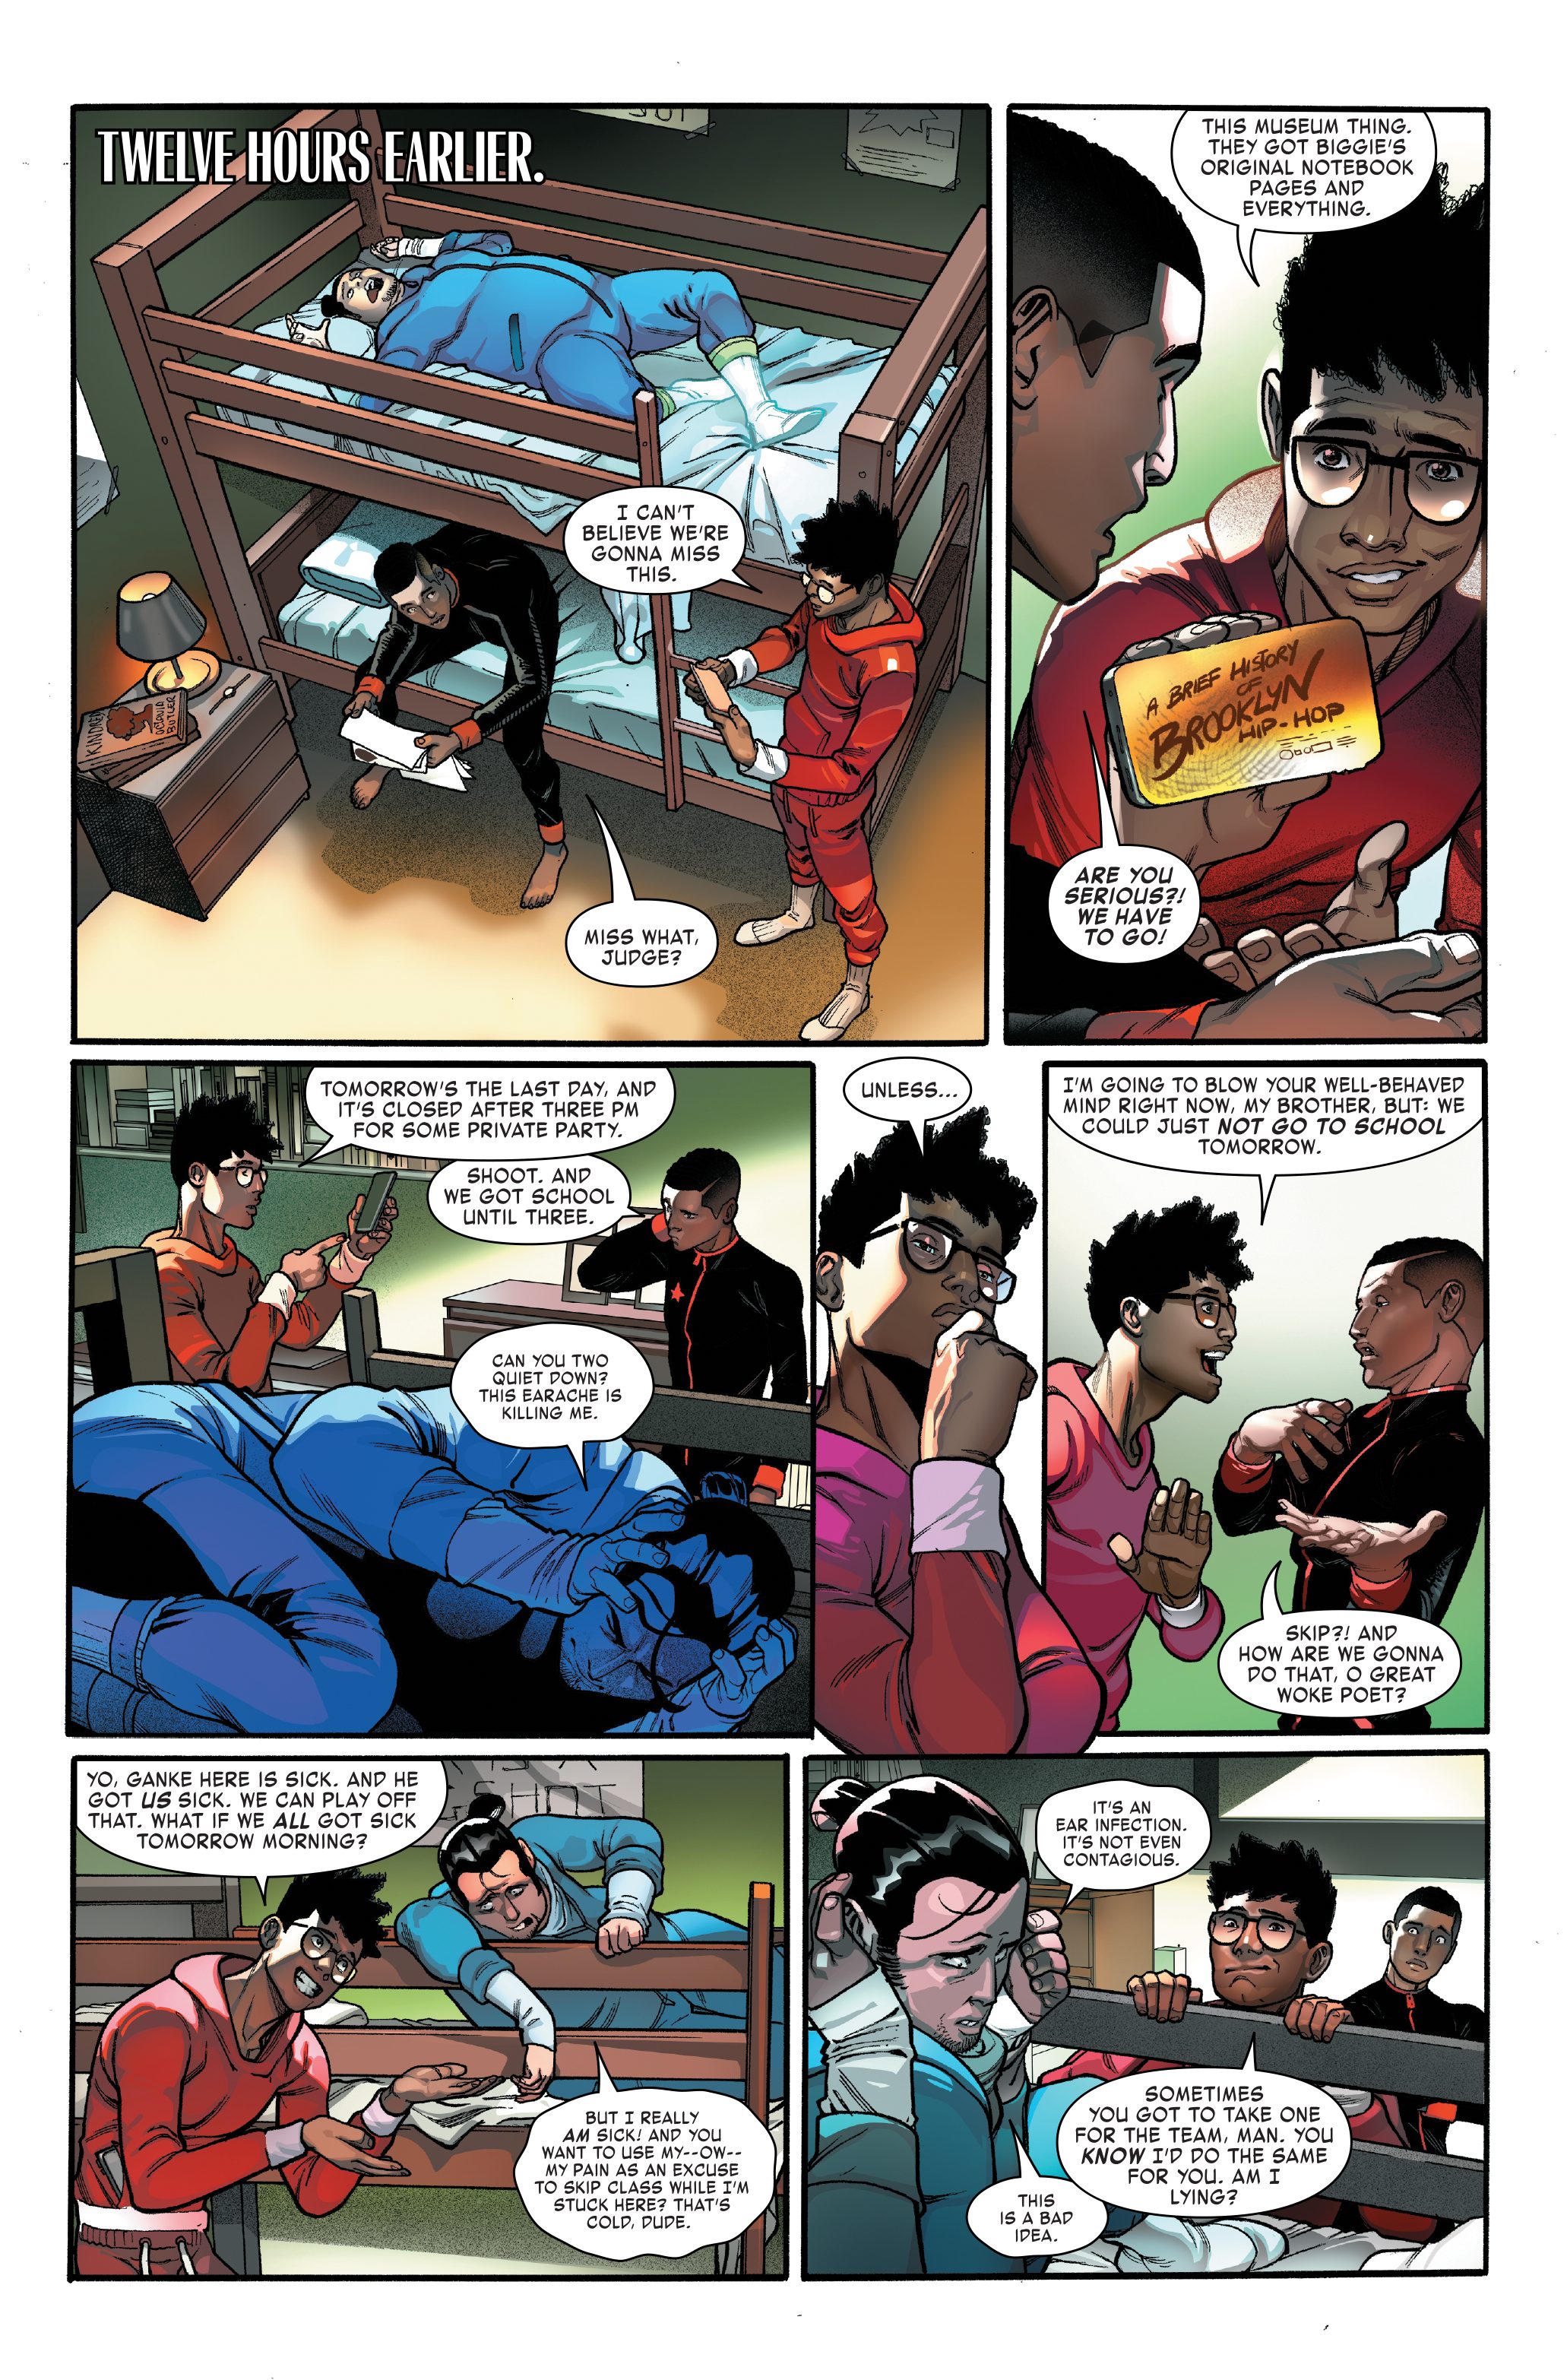 Miles Morales: Spider-Man #4 page 2